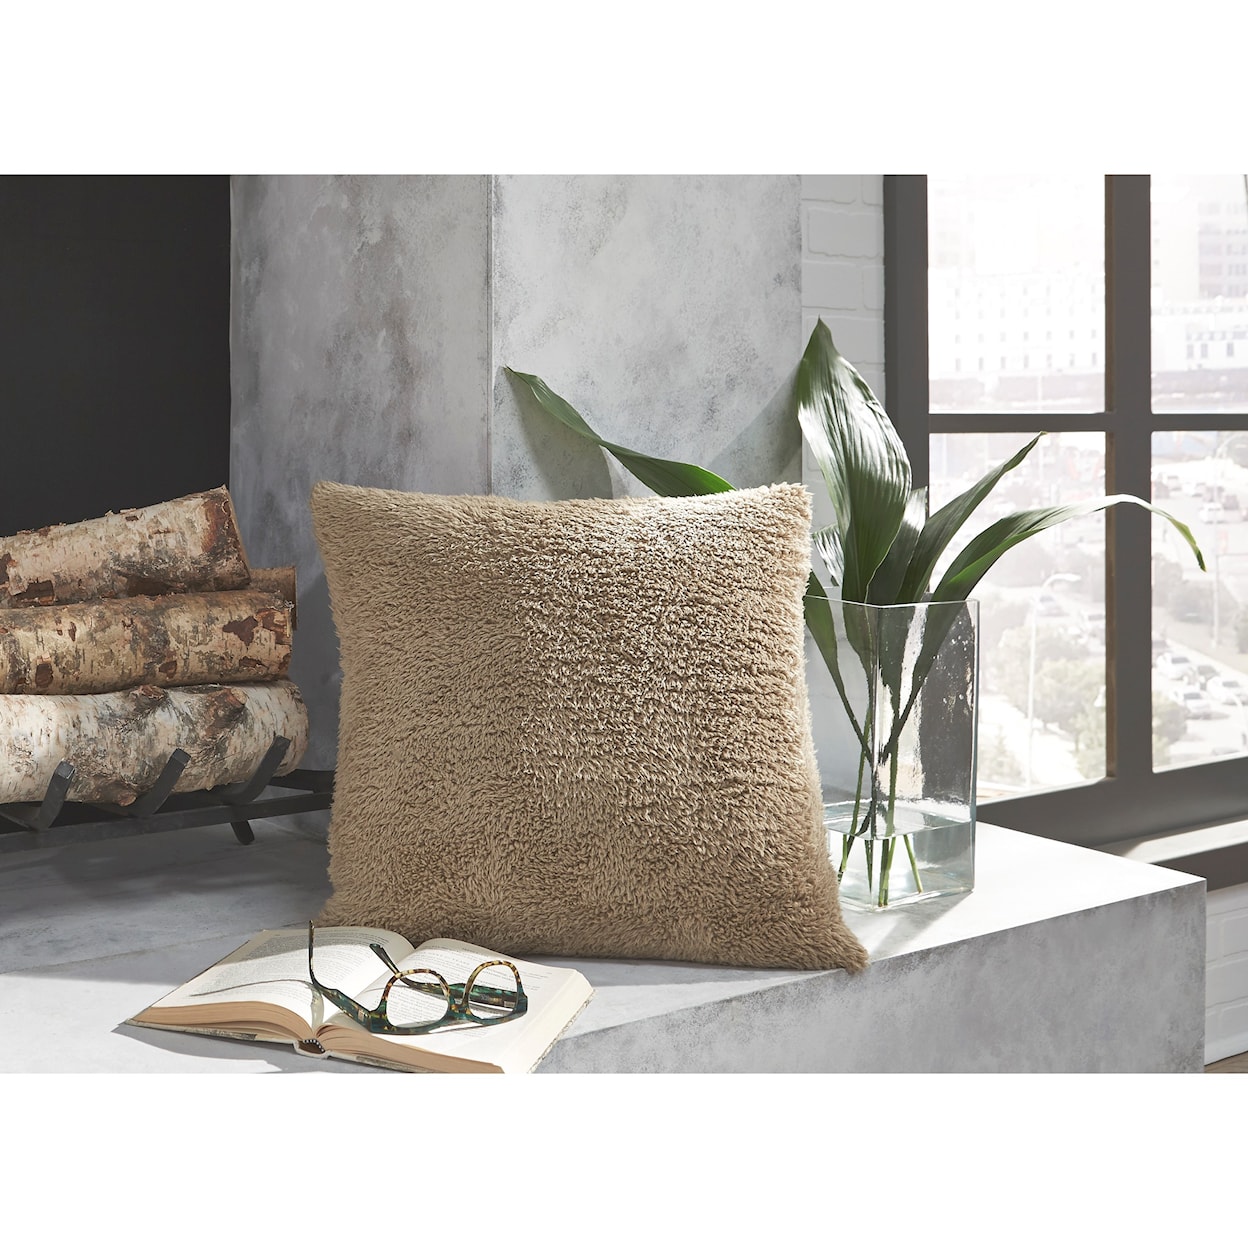 Ashley Furniture Signature Design Pillows Hulsey Latte Pillow